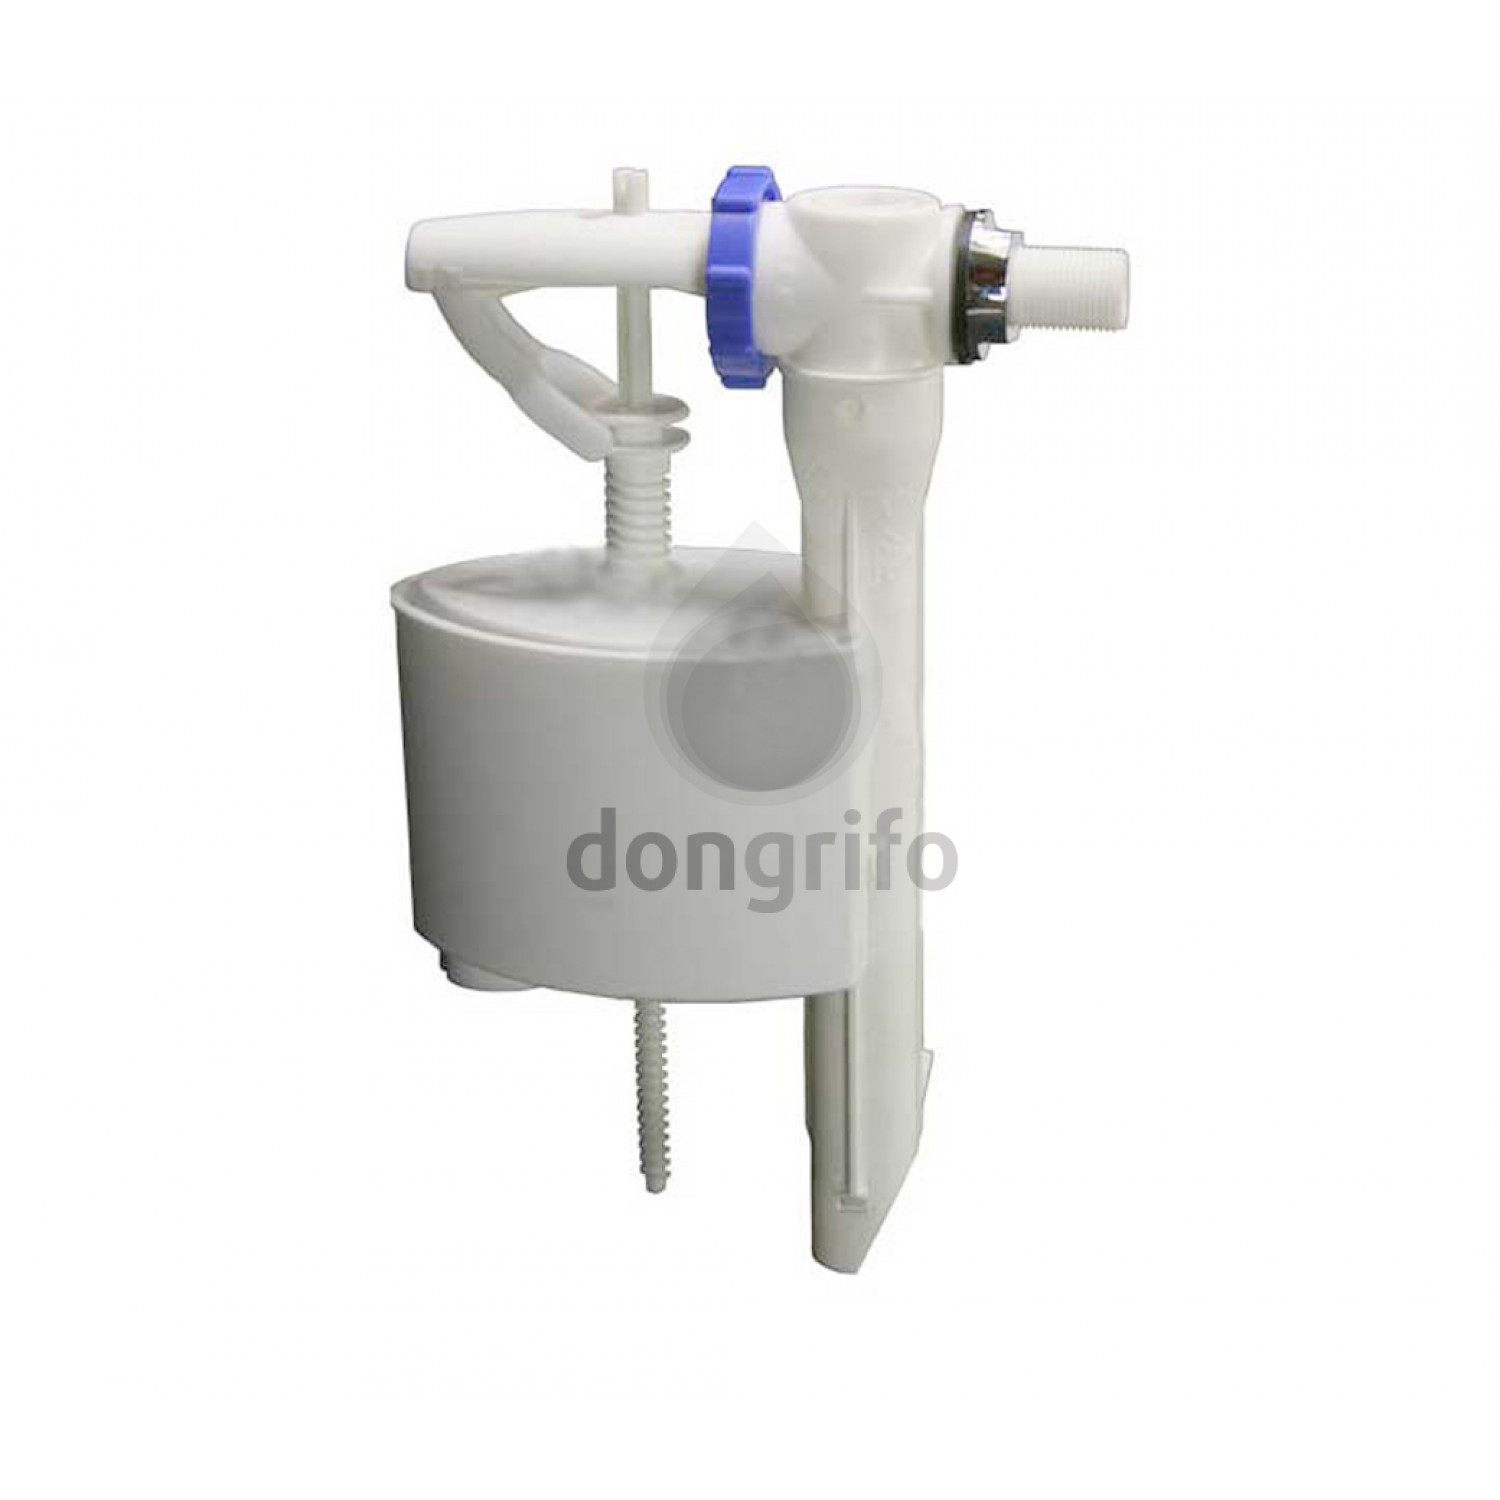 Grifo flotador cisterna entrada lateral ahorro agua - Drena - 00590